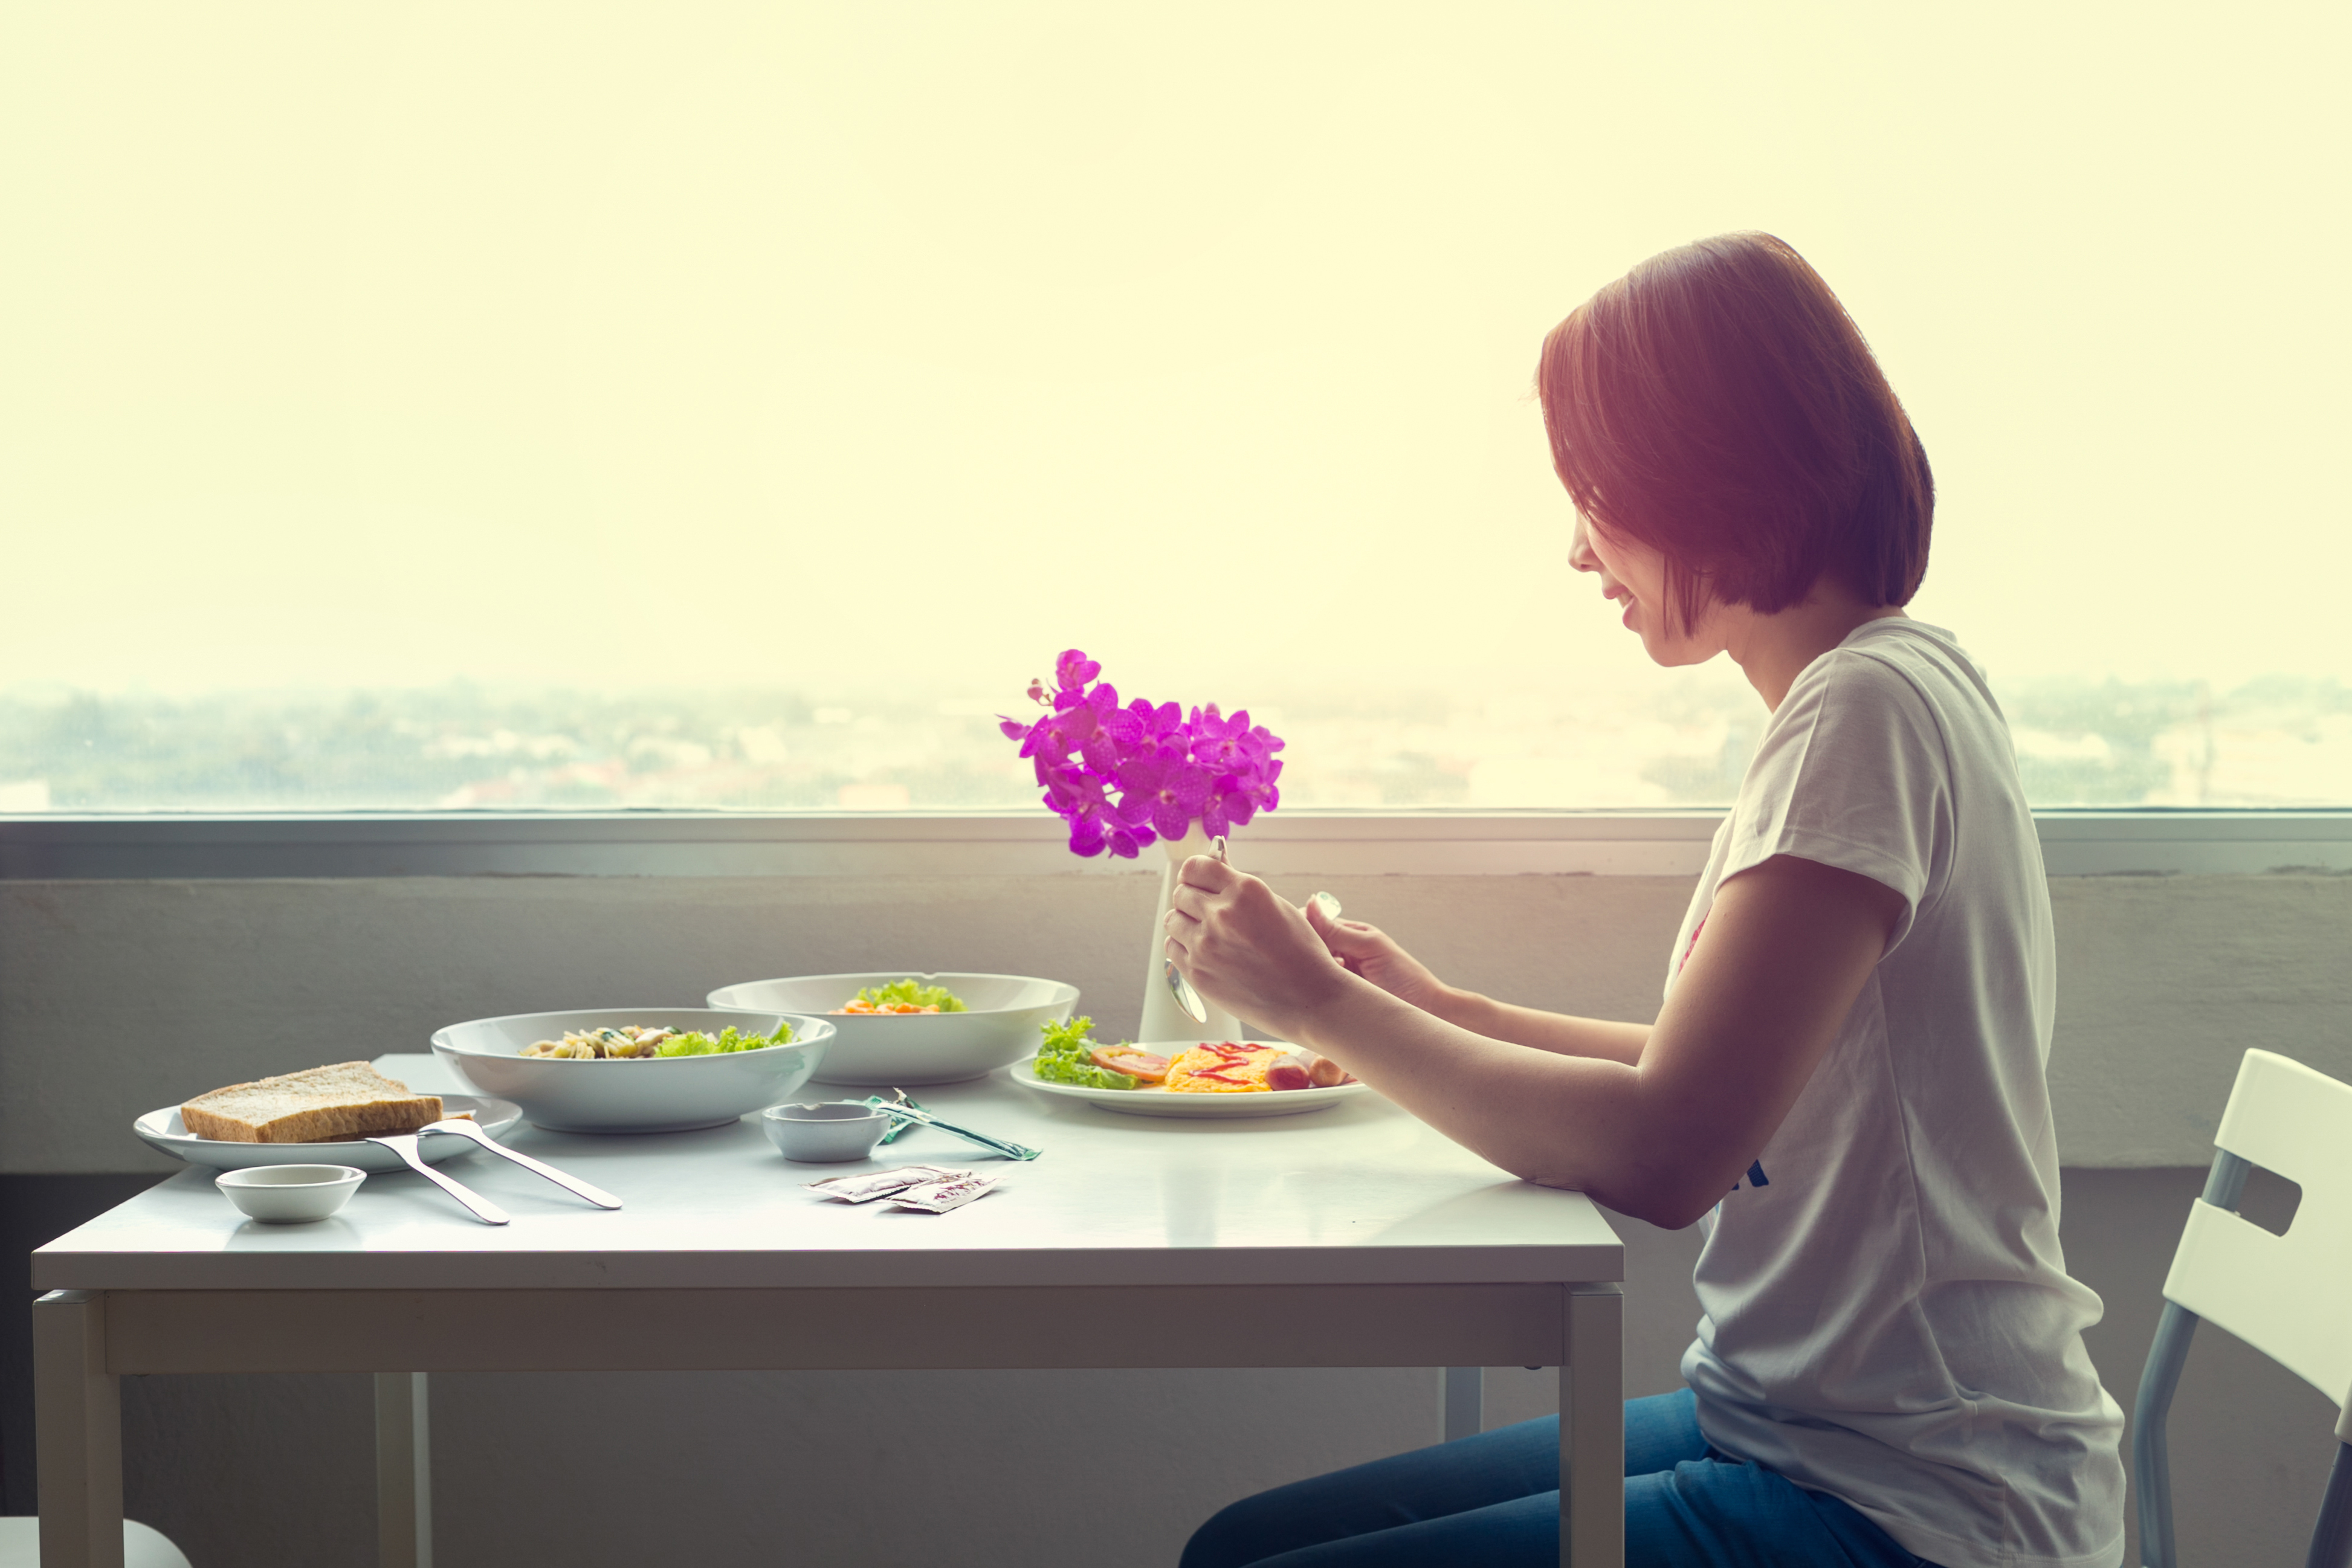 A woman eating a restaurant dinner alone | Source: Shutterstock